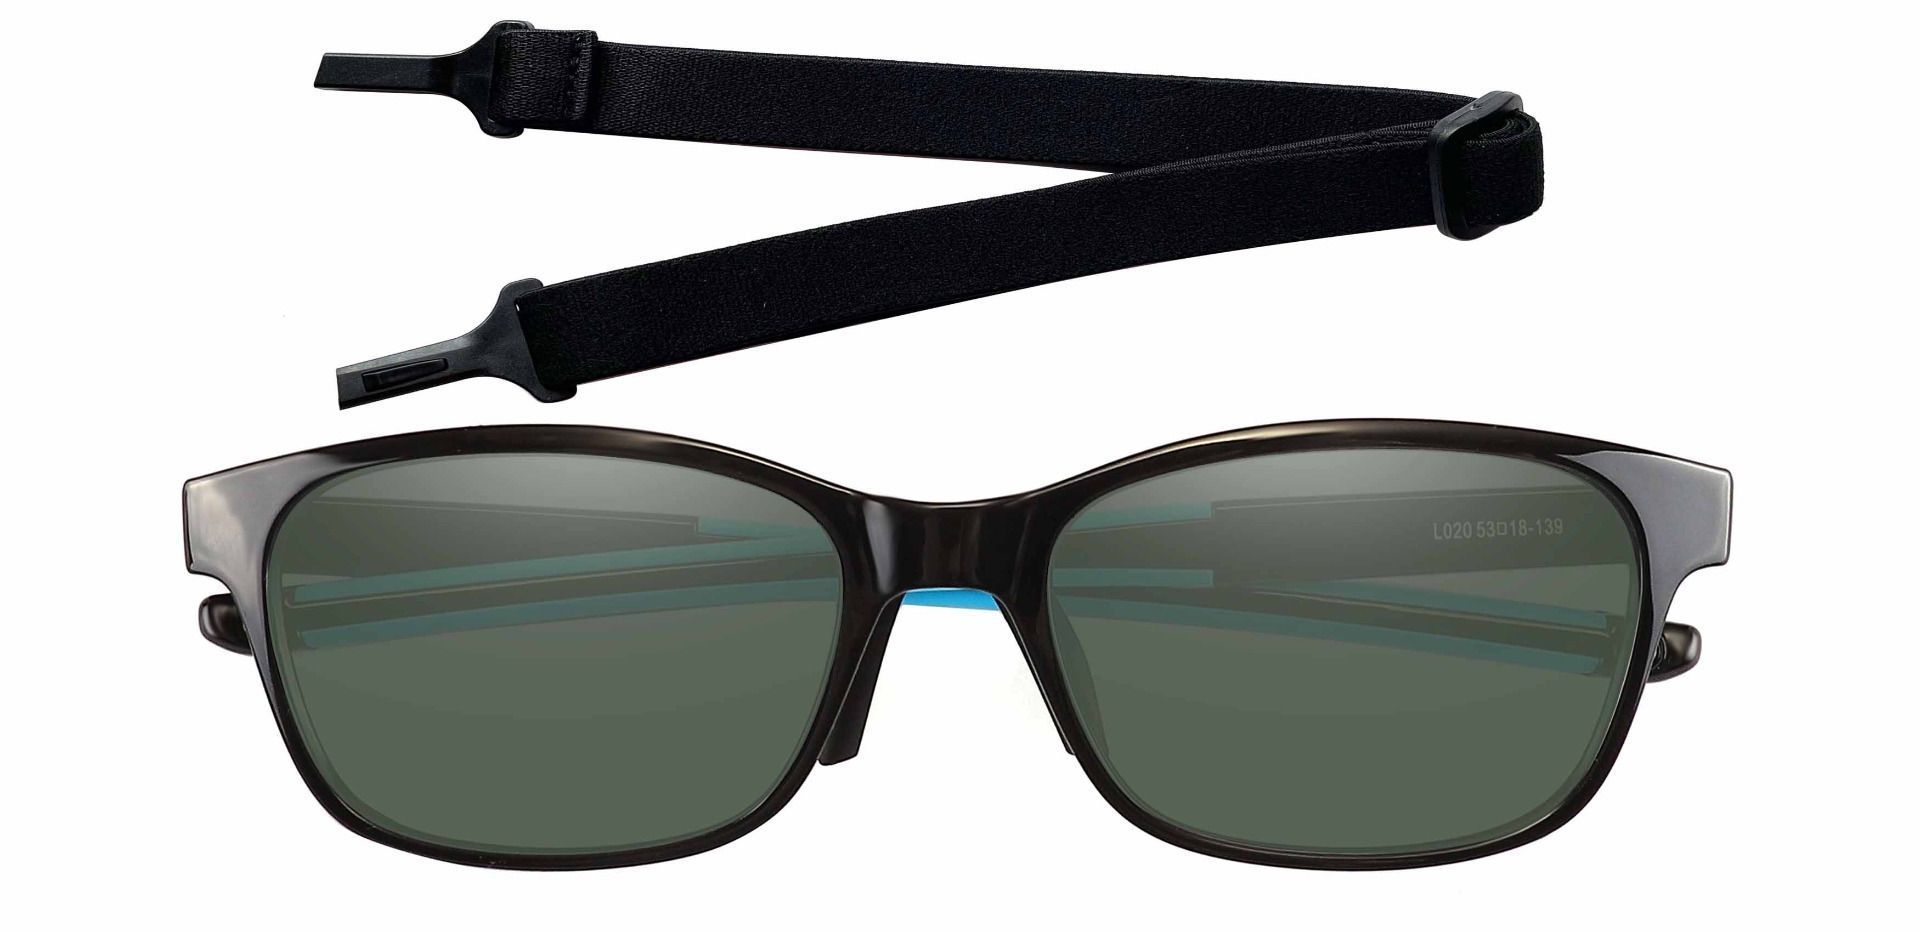 Higgins Rectangle Progressive Sunglasses - Black Frame With Green Lenses